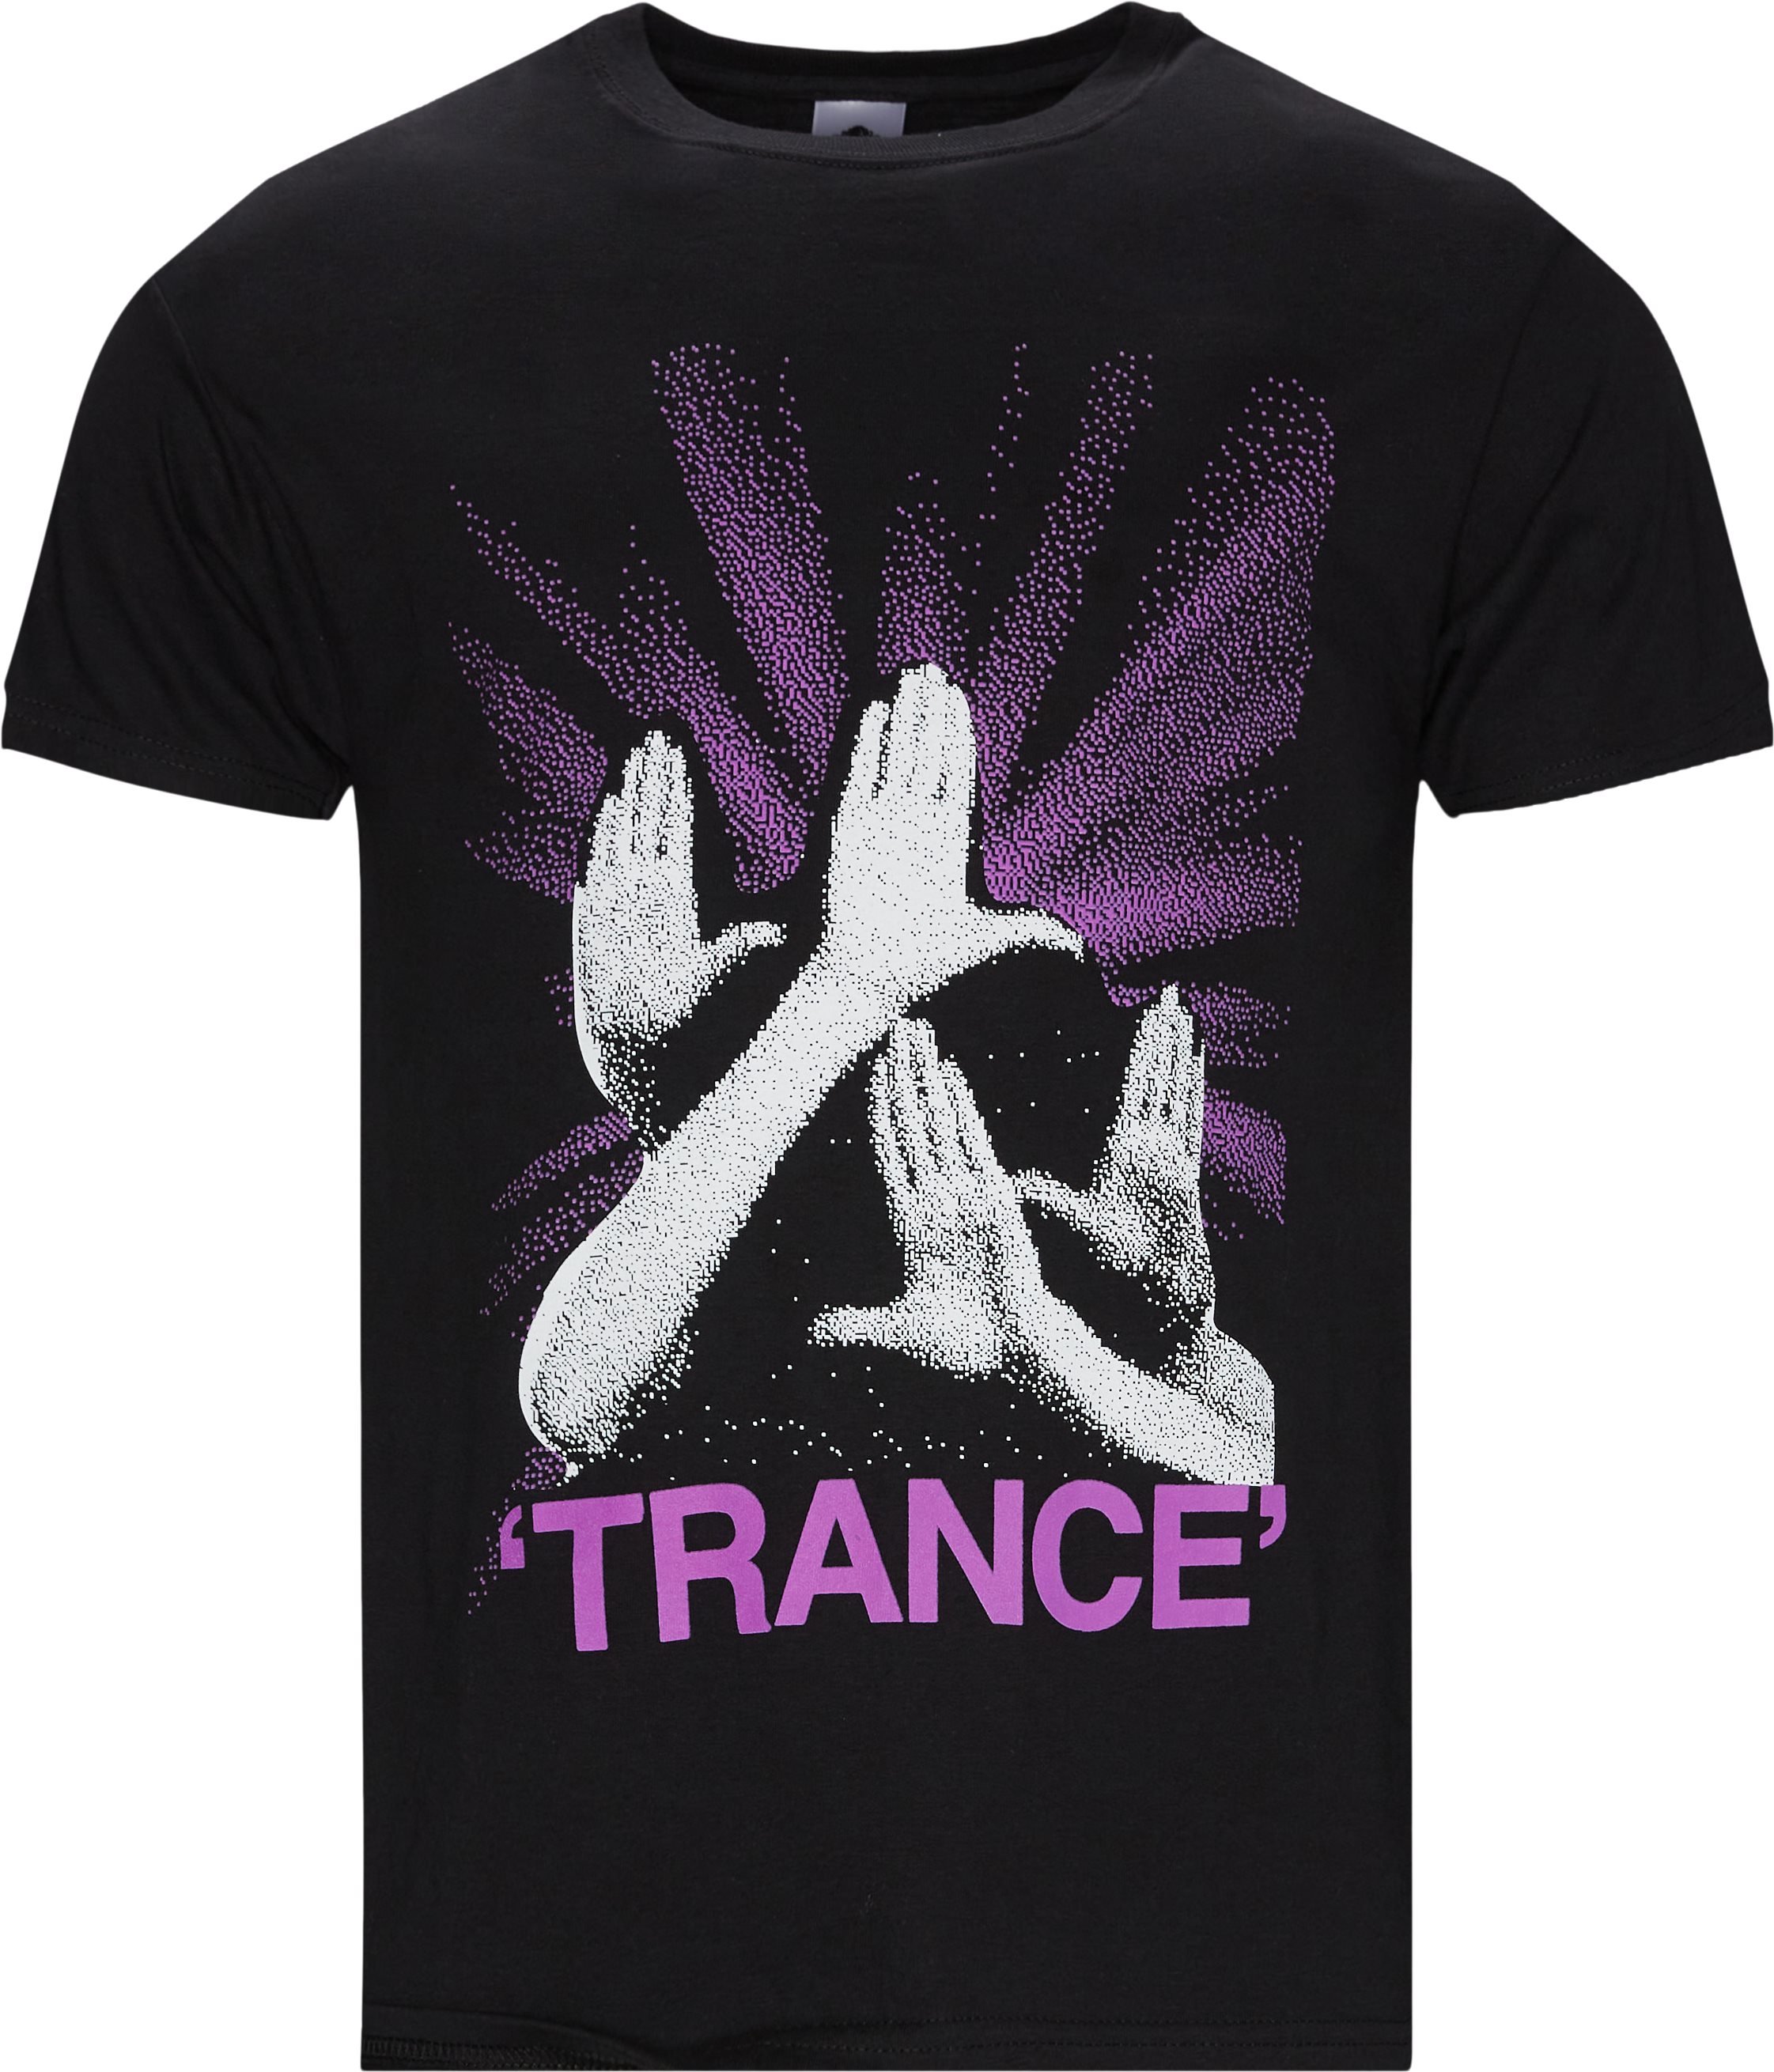 Trance Tee - T-shirts - Regular fit - Svart